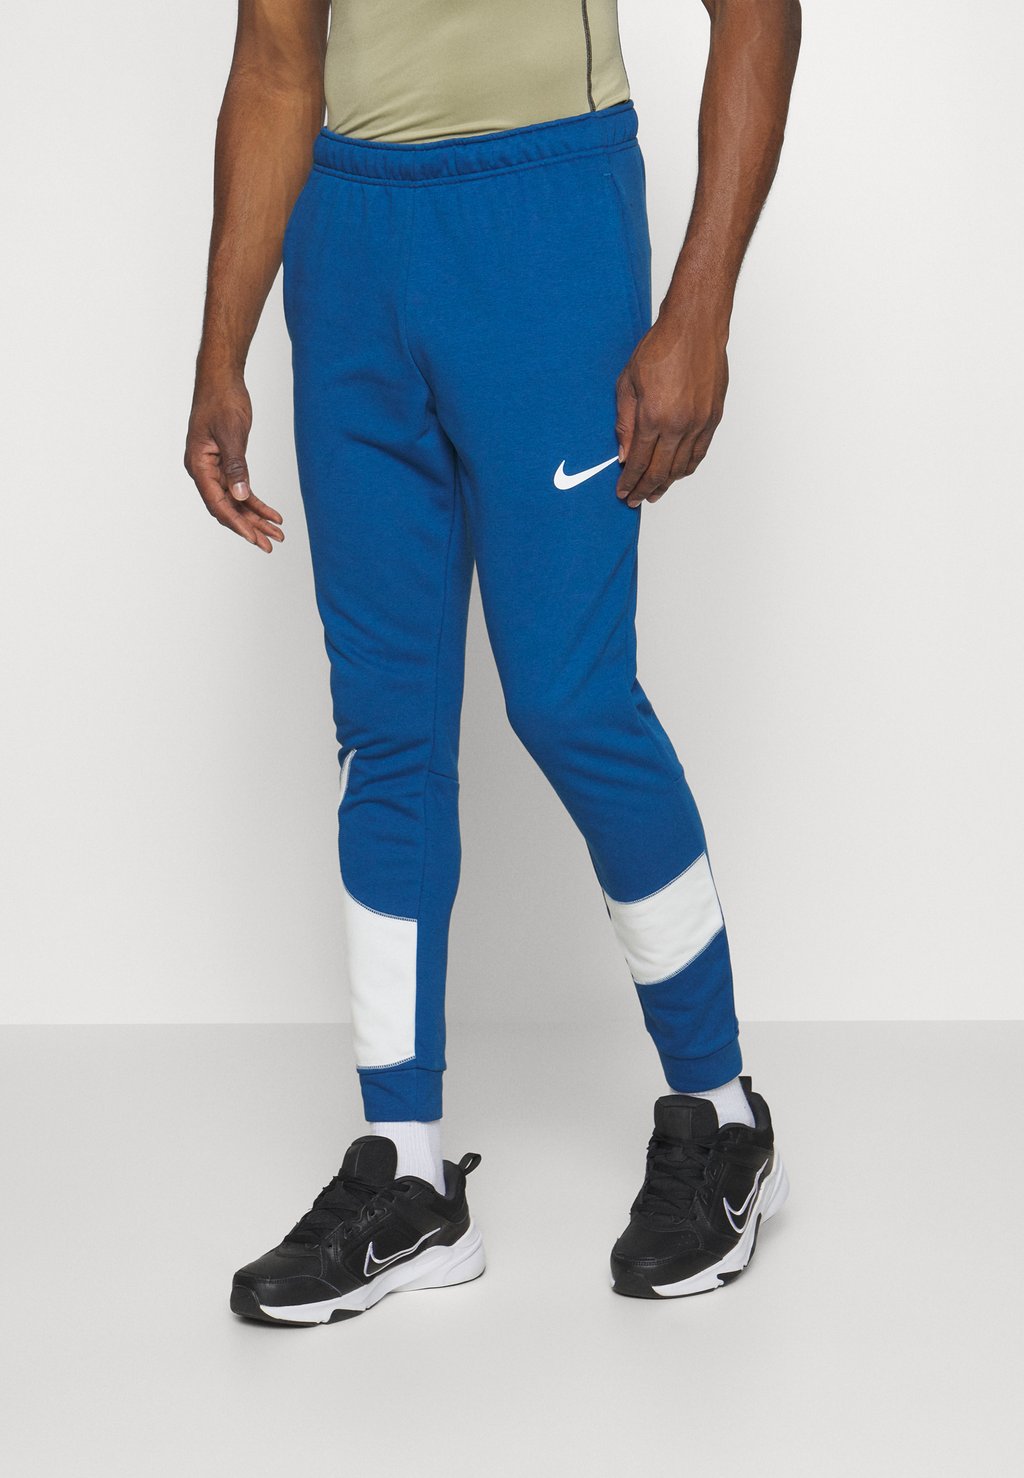 Спортивные брюки PANT TAPER ENERGY Nike, синий/белый спортивные брюки pant taper energy nike цвет oil green sea glass